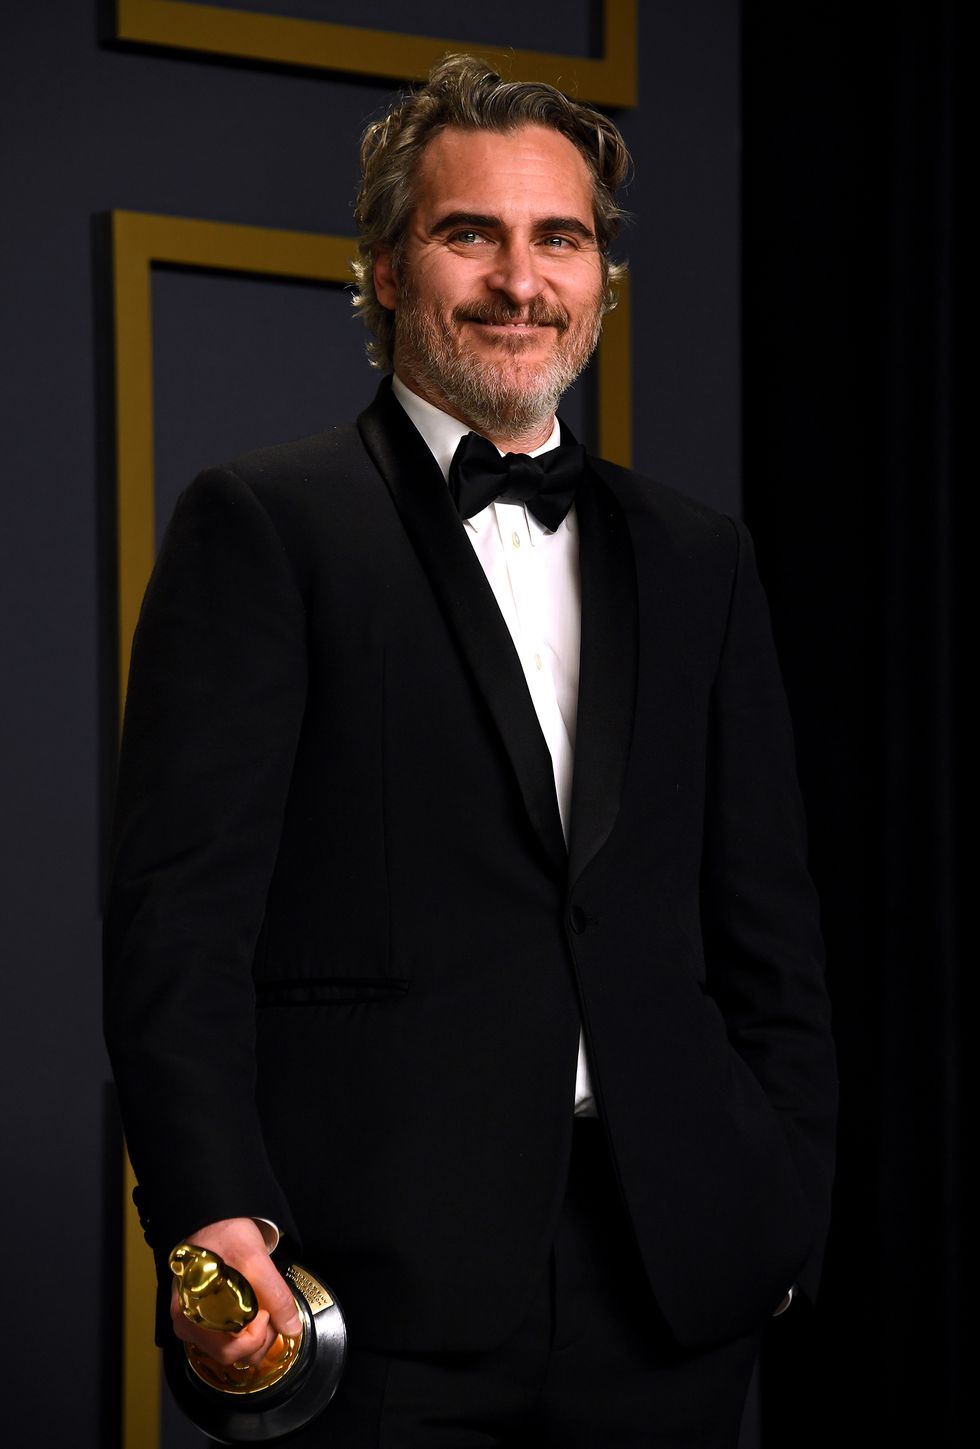 Premios Oscar Joaquin Phoenix elle.es